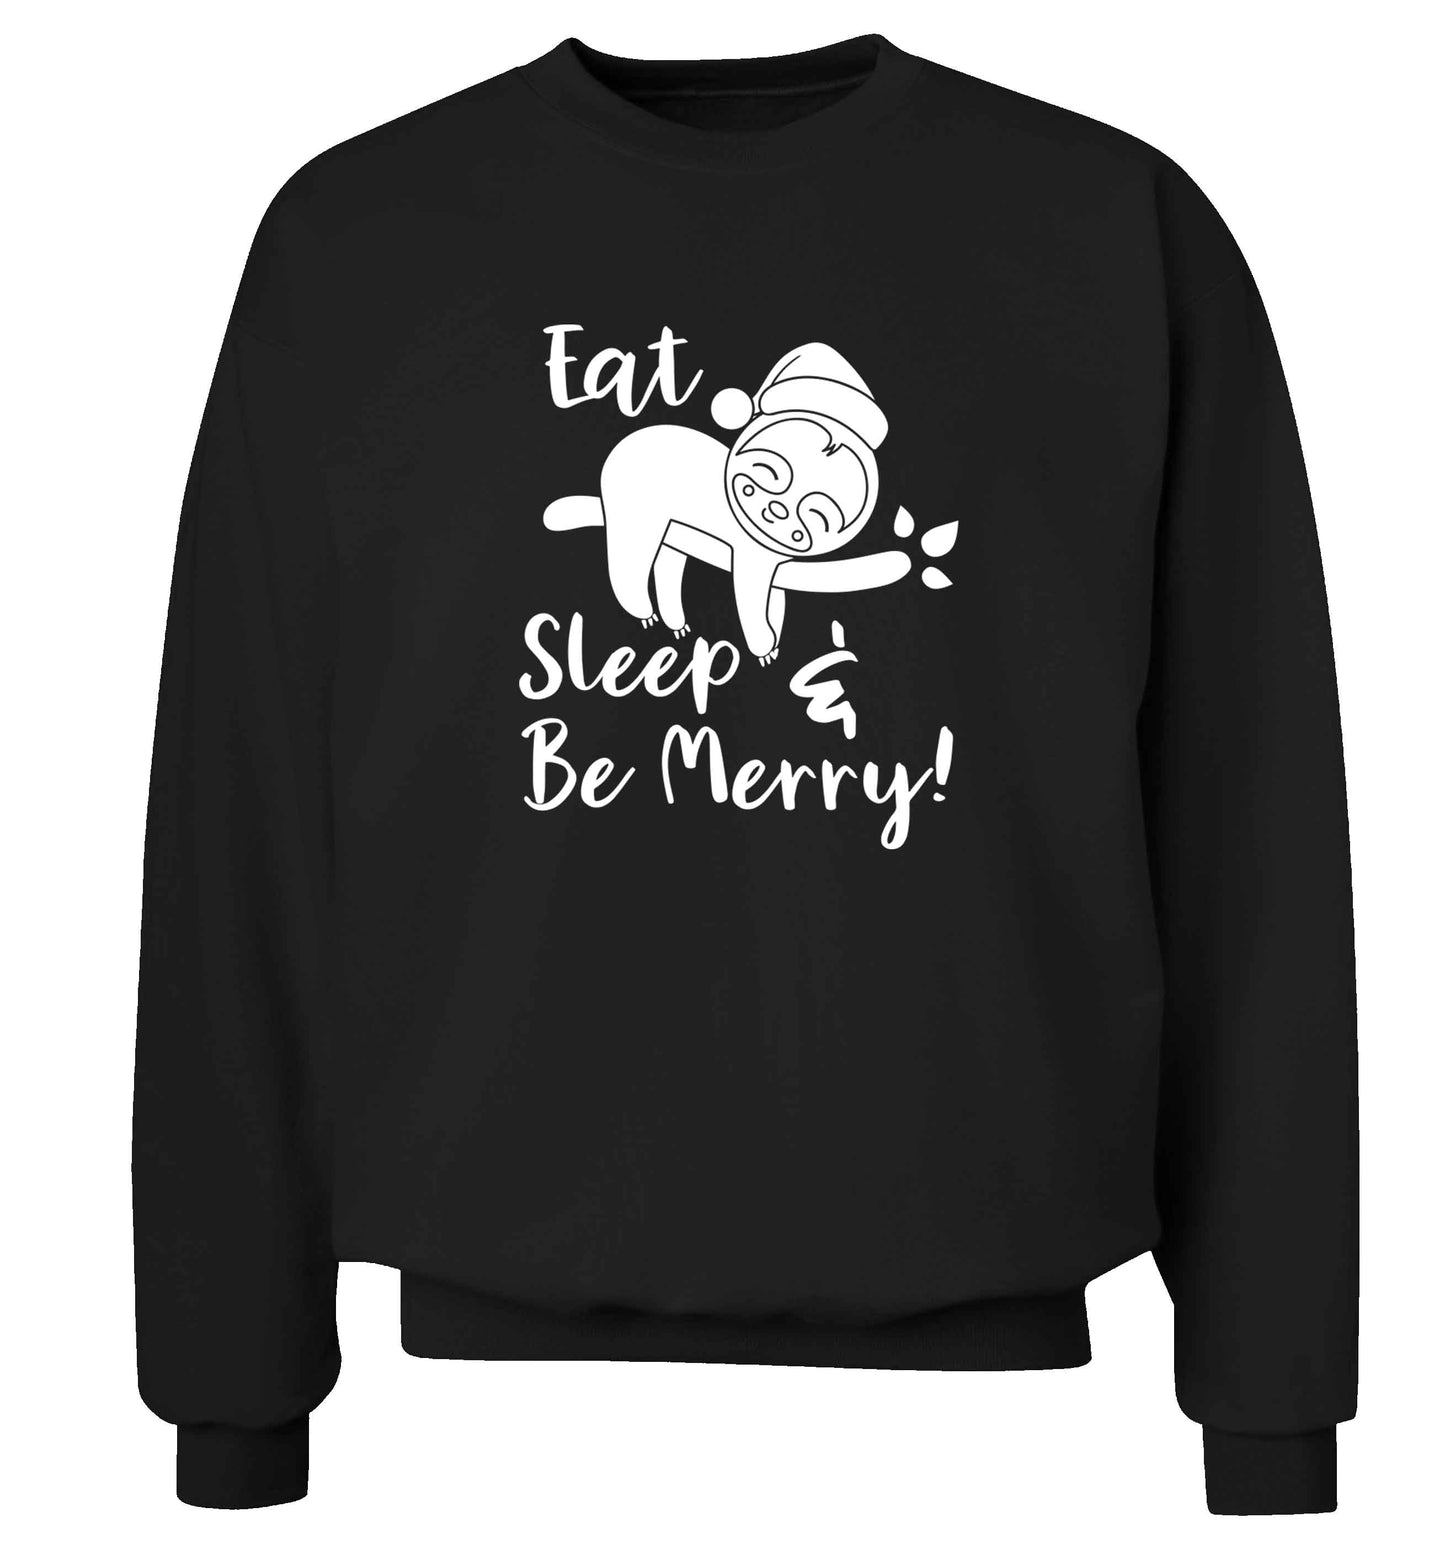 Merry Slothmas adult's unisex black sweater 2XL